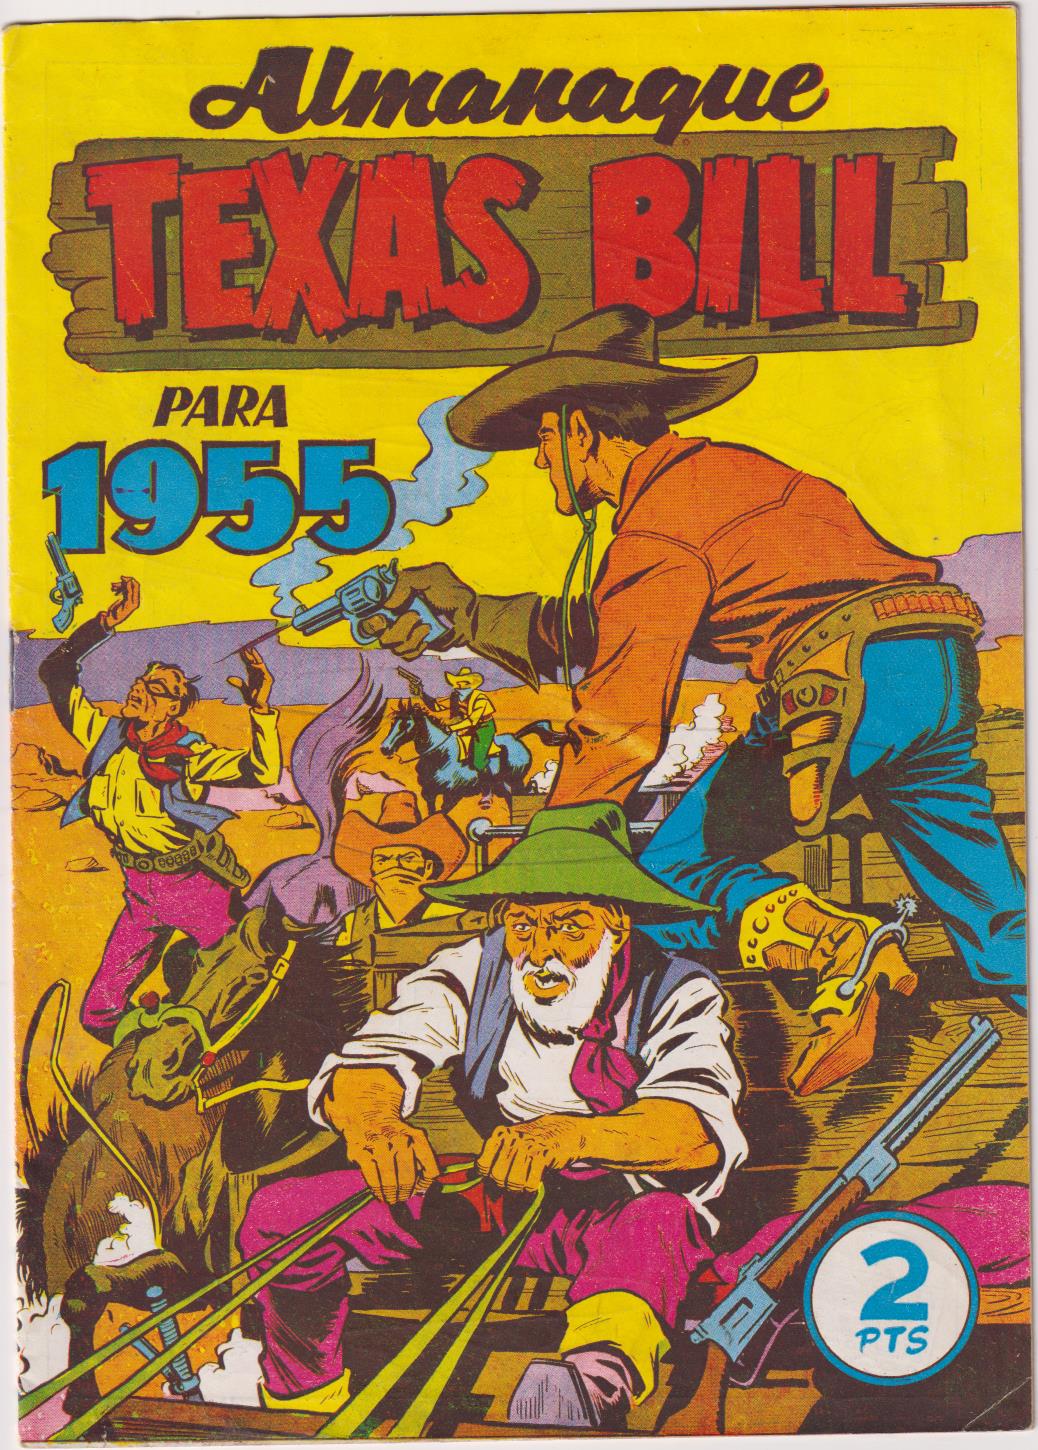 Texas Bill. Almanaque 1955. Hispano Americana